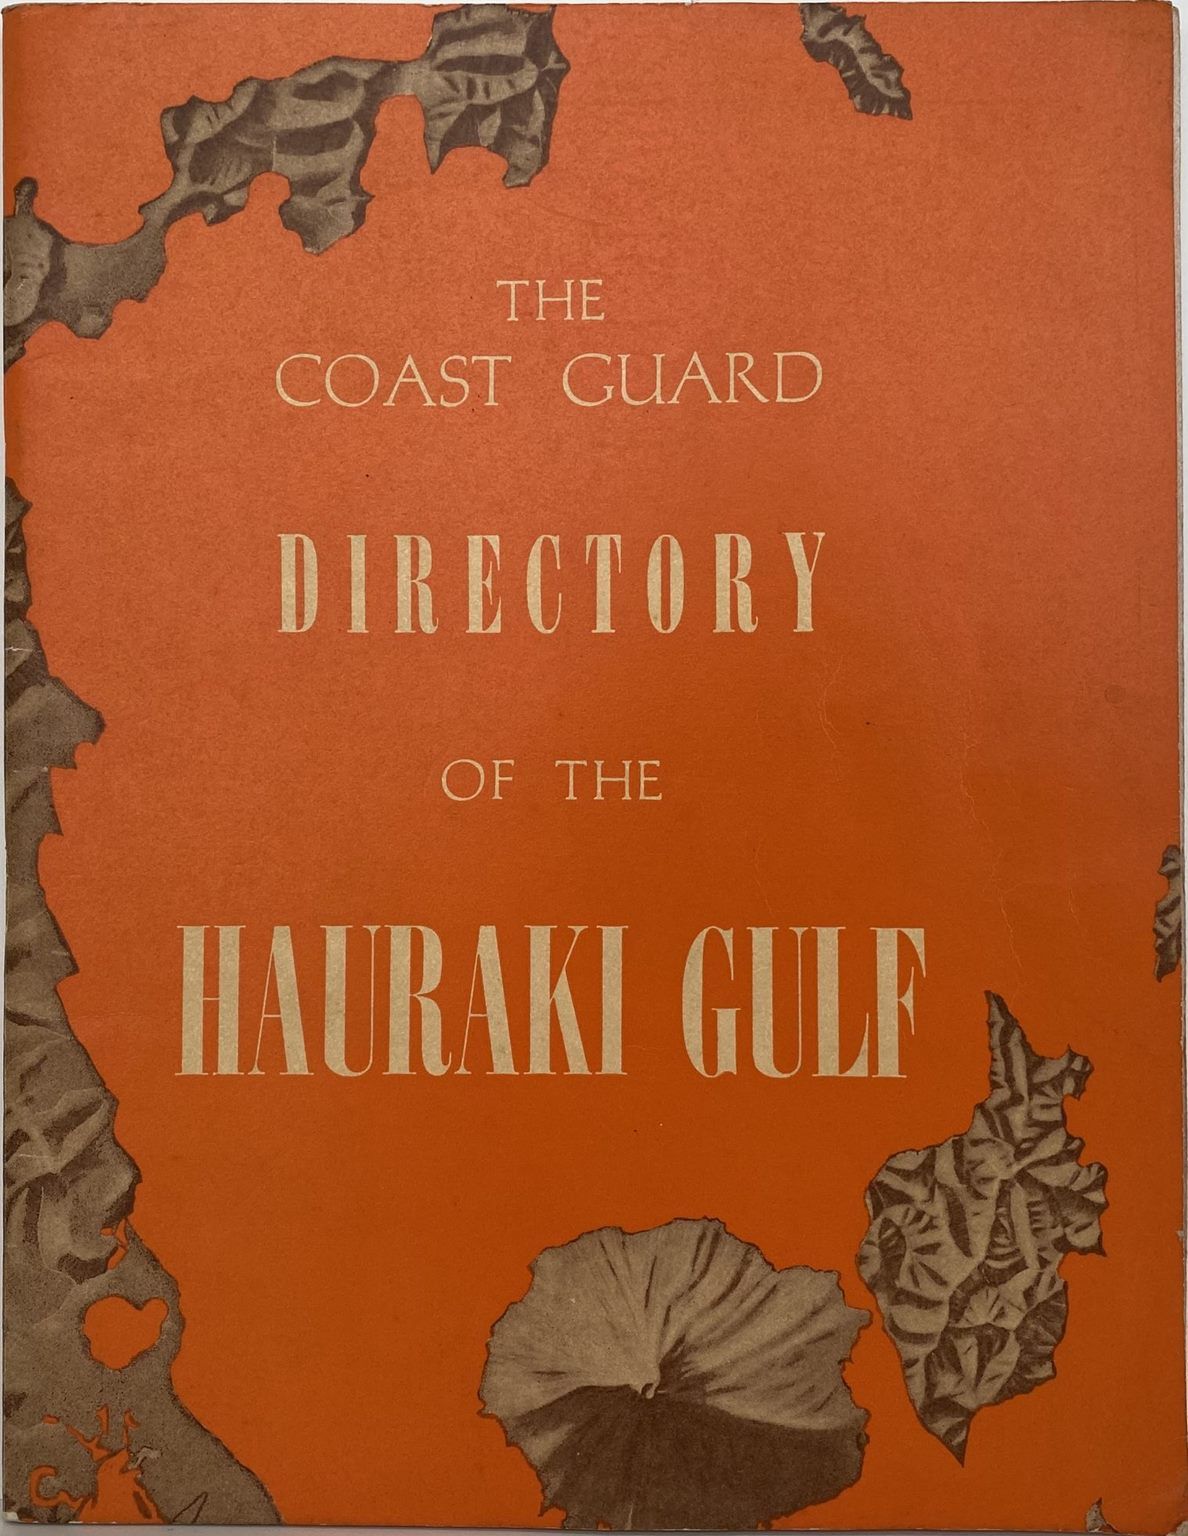 DIRECTORY of The HAURAKI GULF: Coast Guard